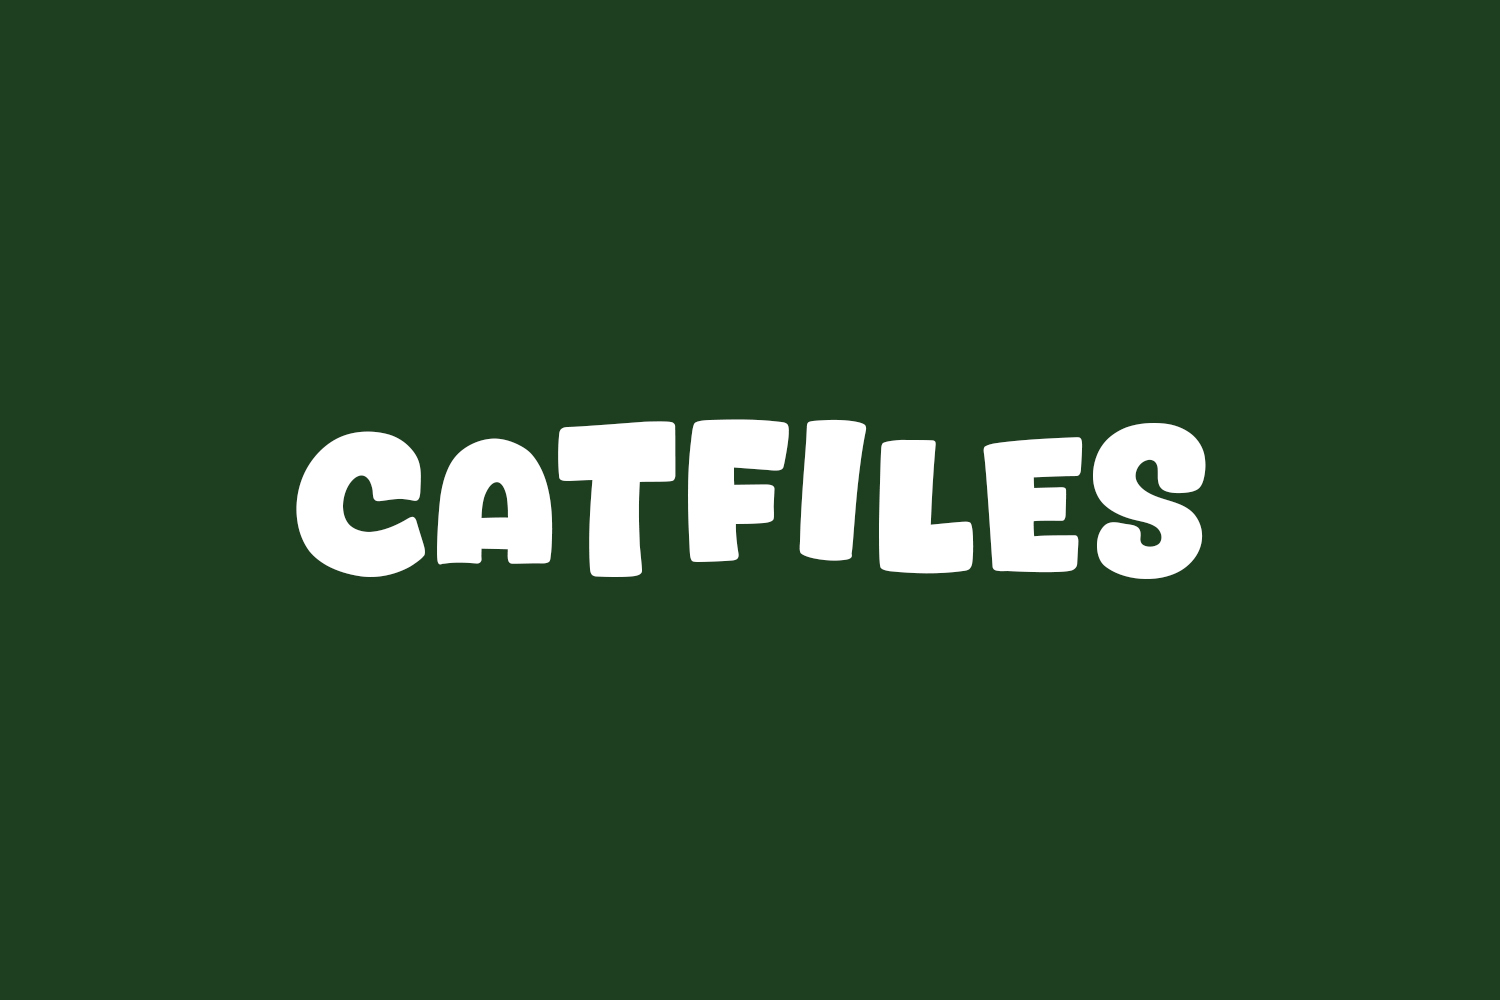 Free Catfiles Font